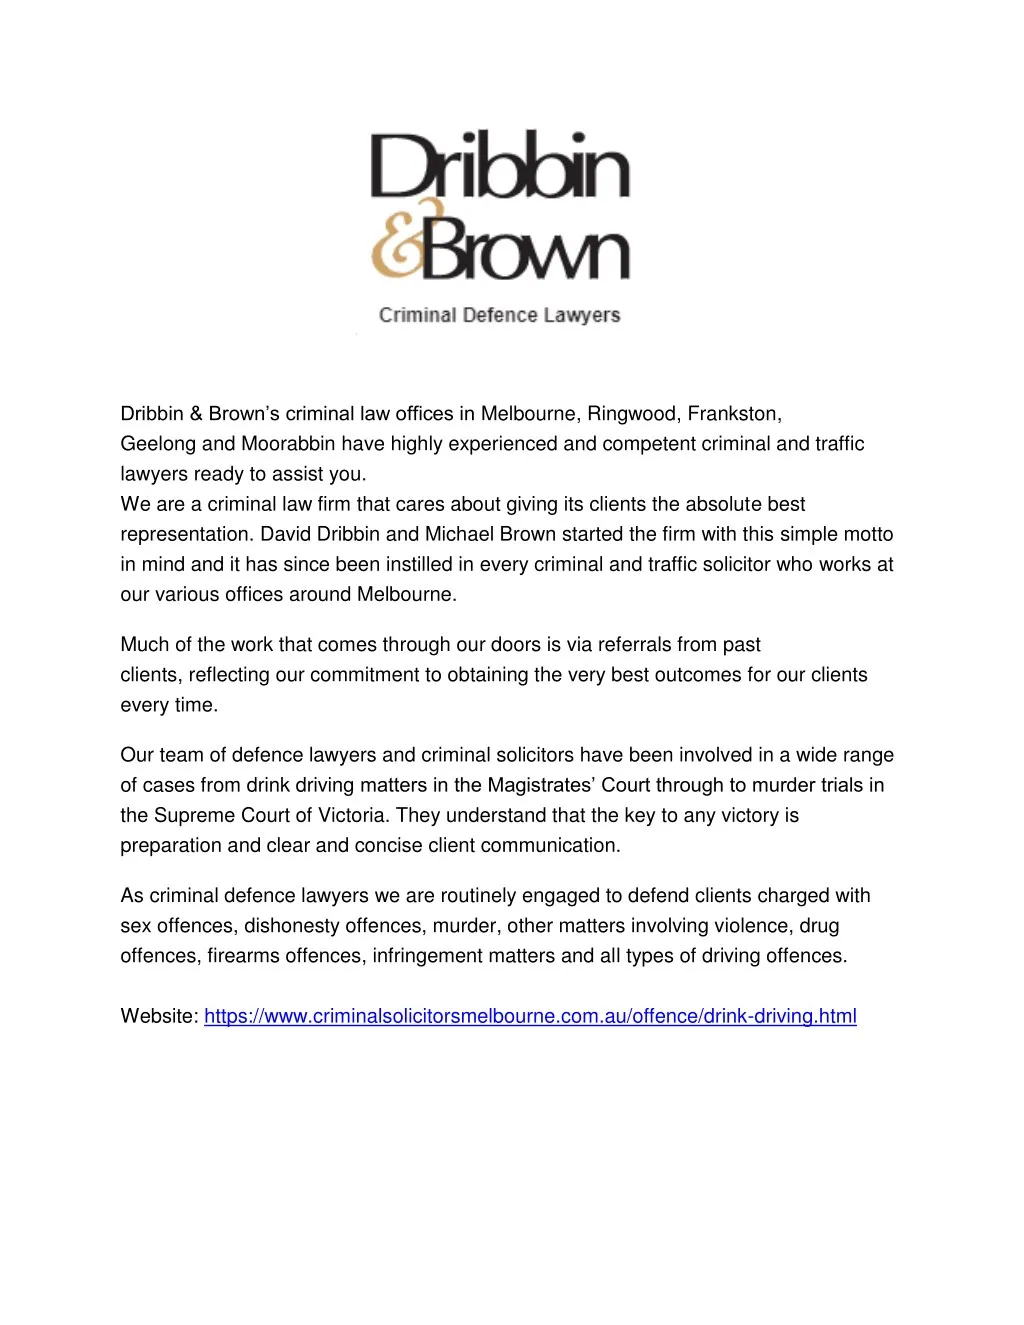 dribbin brown s criminal law offices in melbourne